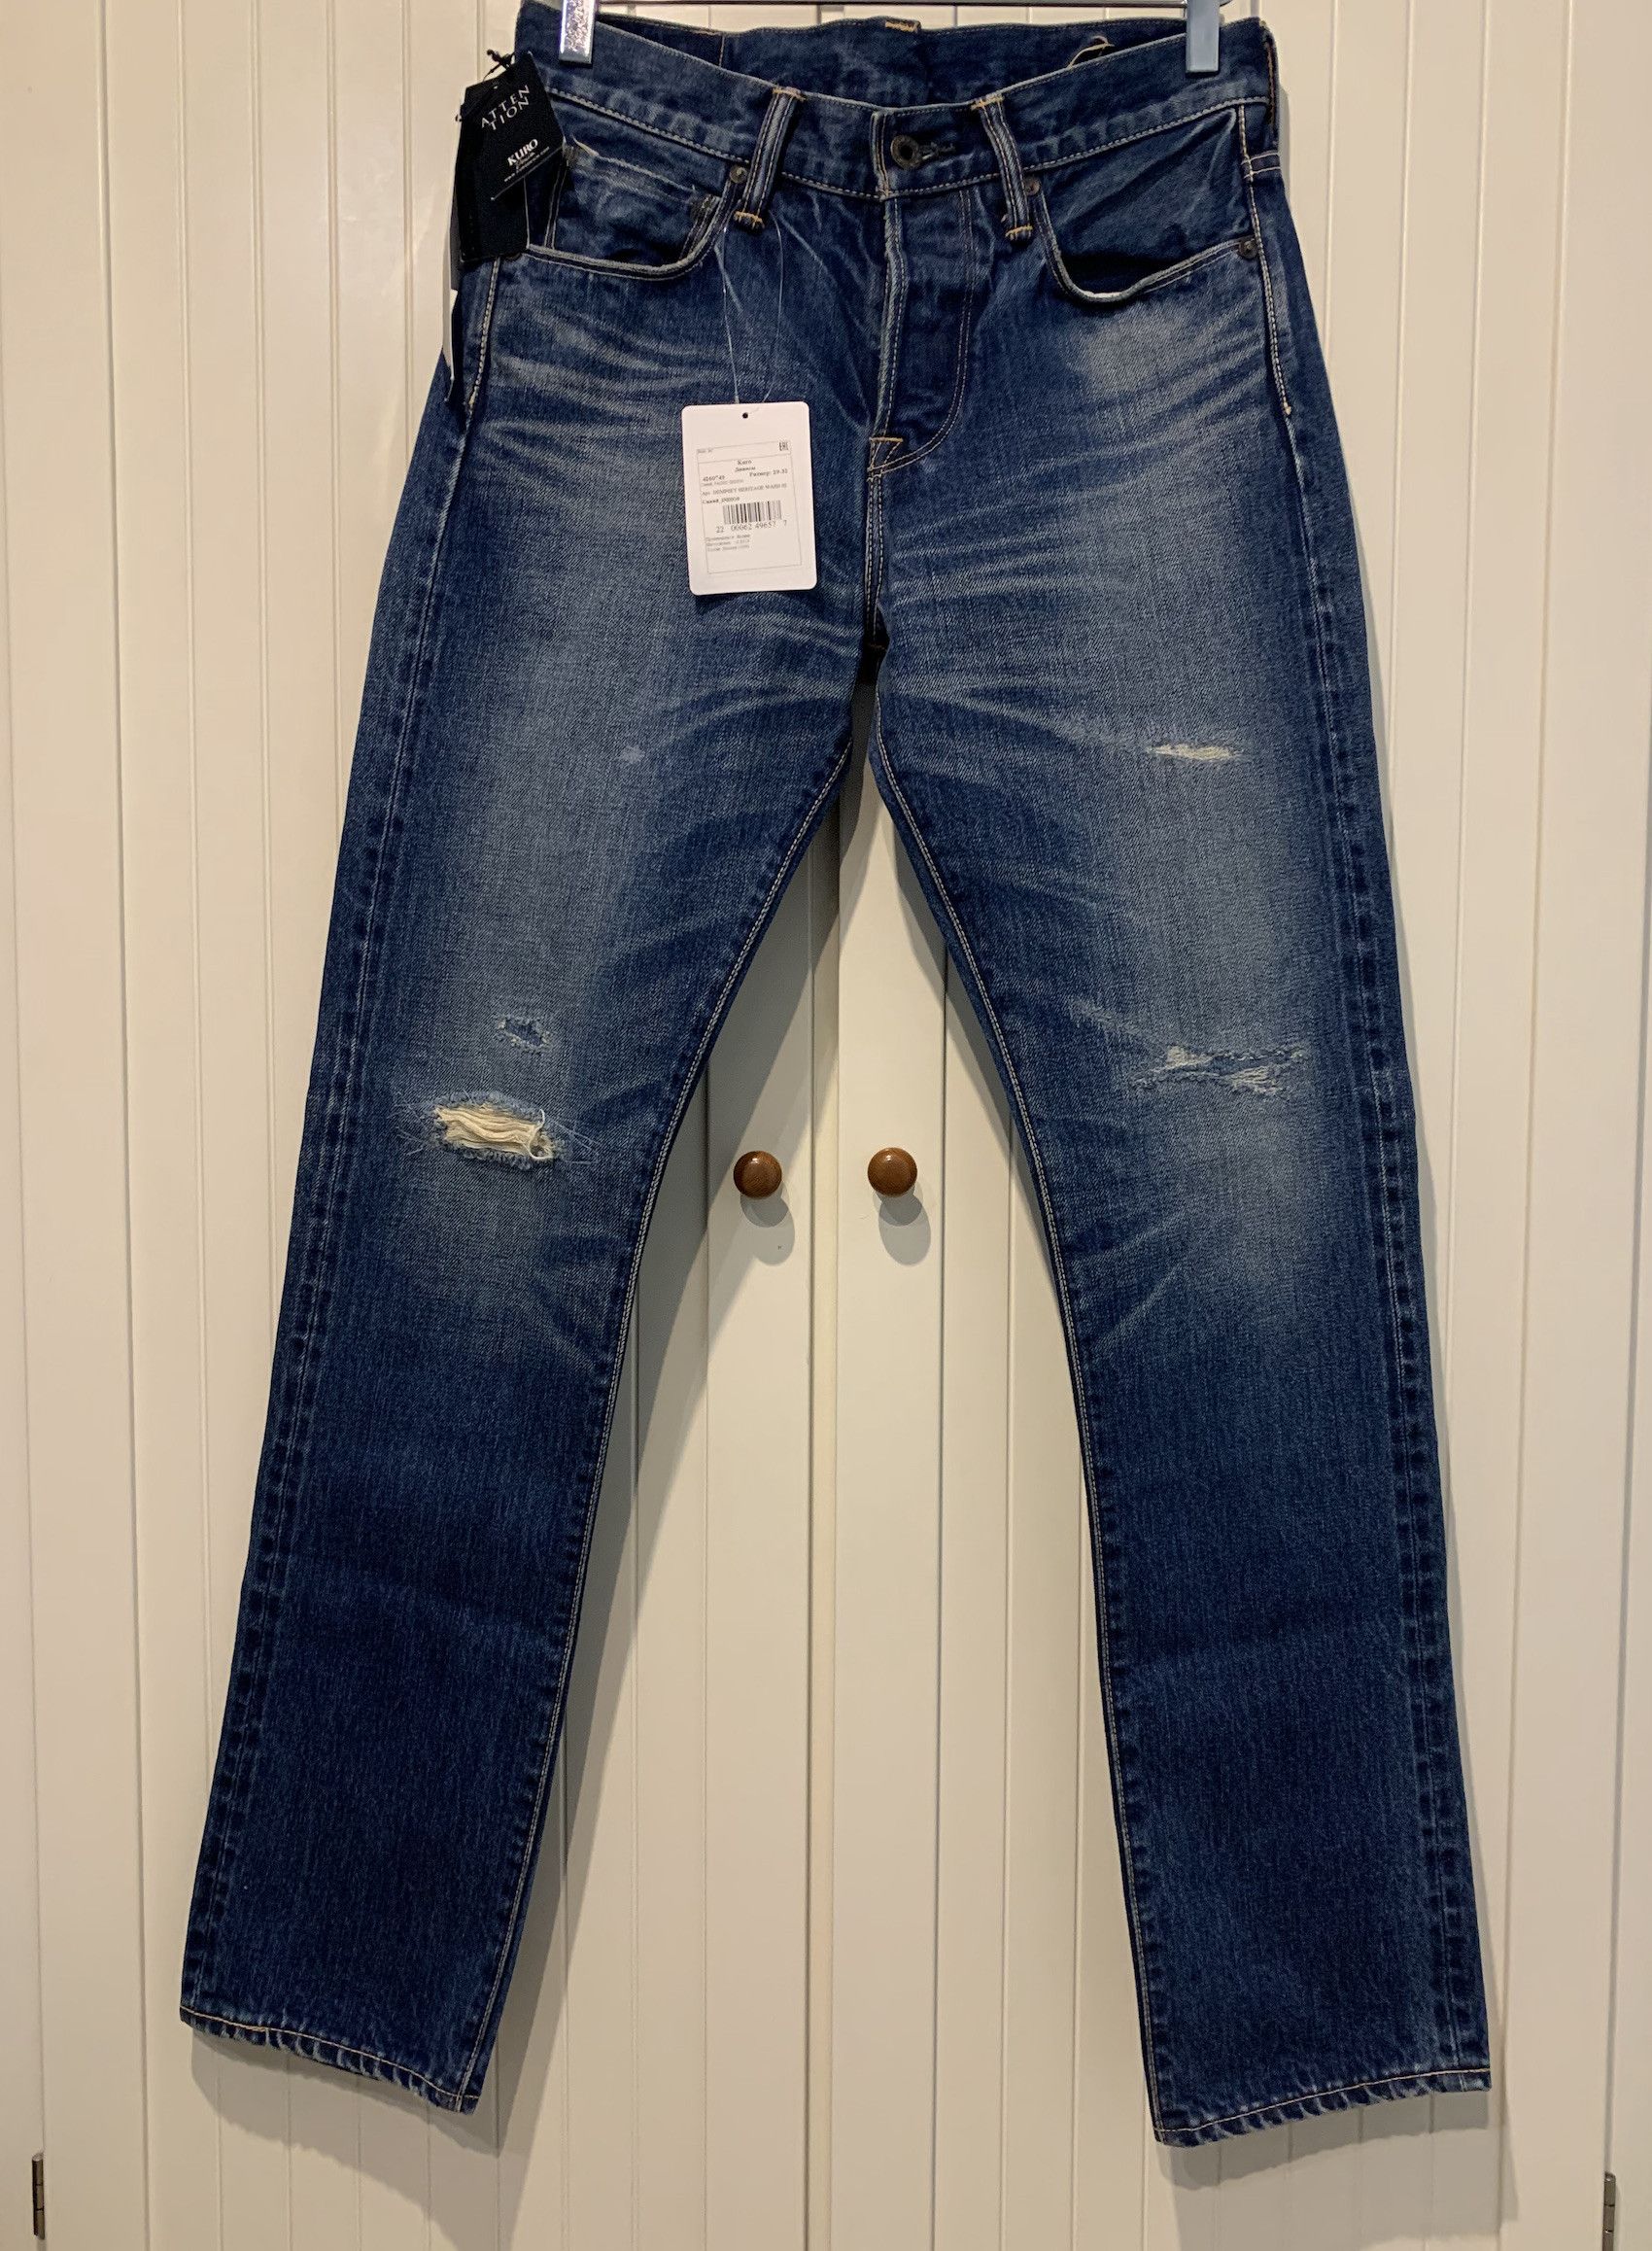 Kuro FINAL DROP / FW'14 Jeans Slim 